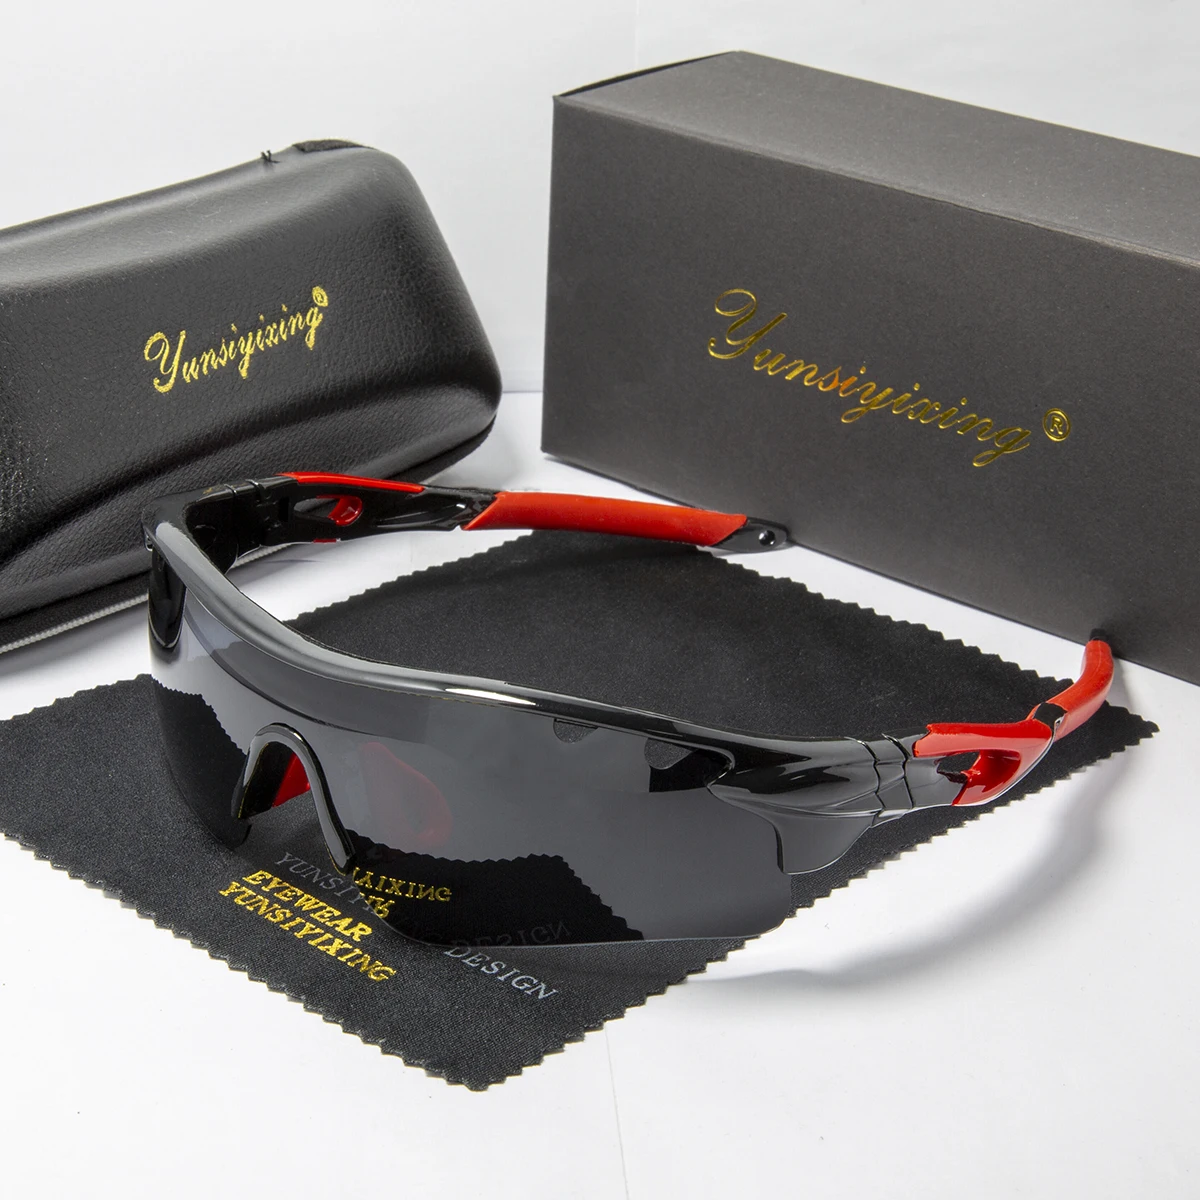 YUNSIYIXING Polarizat ochelari de Soare pentru Bărbați de Conducere Sport Ochelari de Soare Acoperire Oglinda Ochelari, Accesorii Ochelari Pentru Barbati/Femei 8501